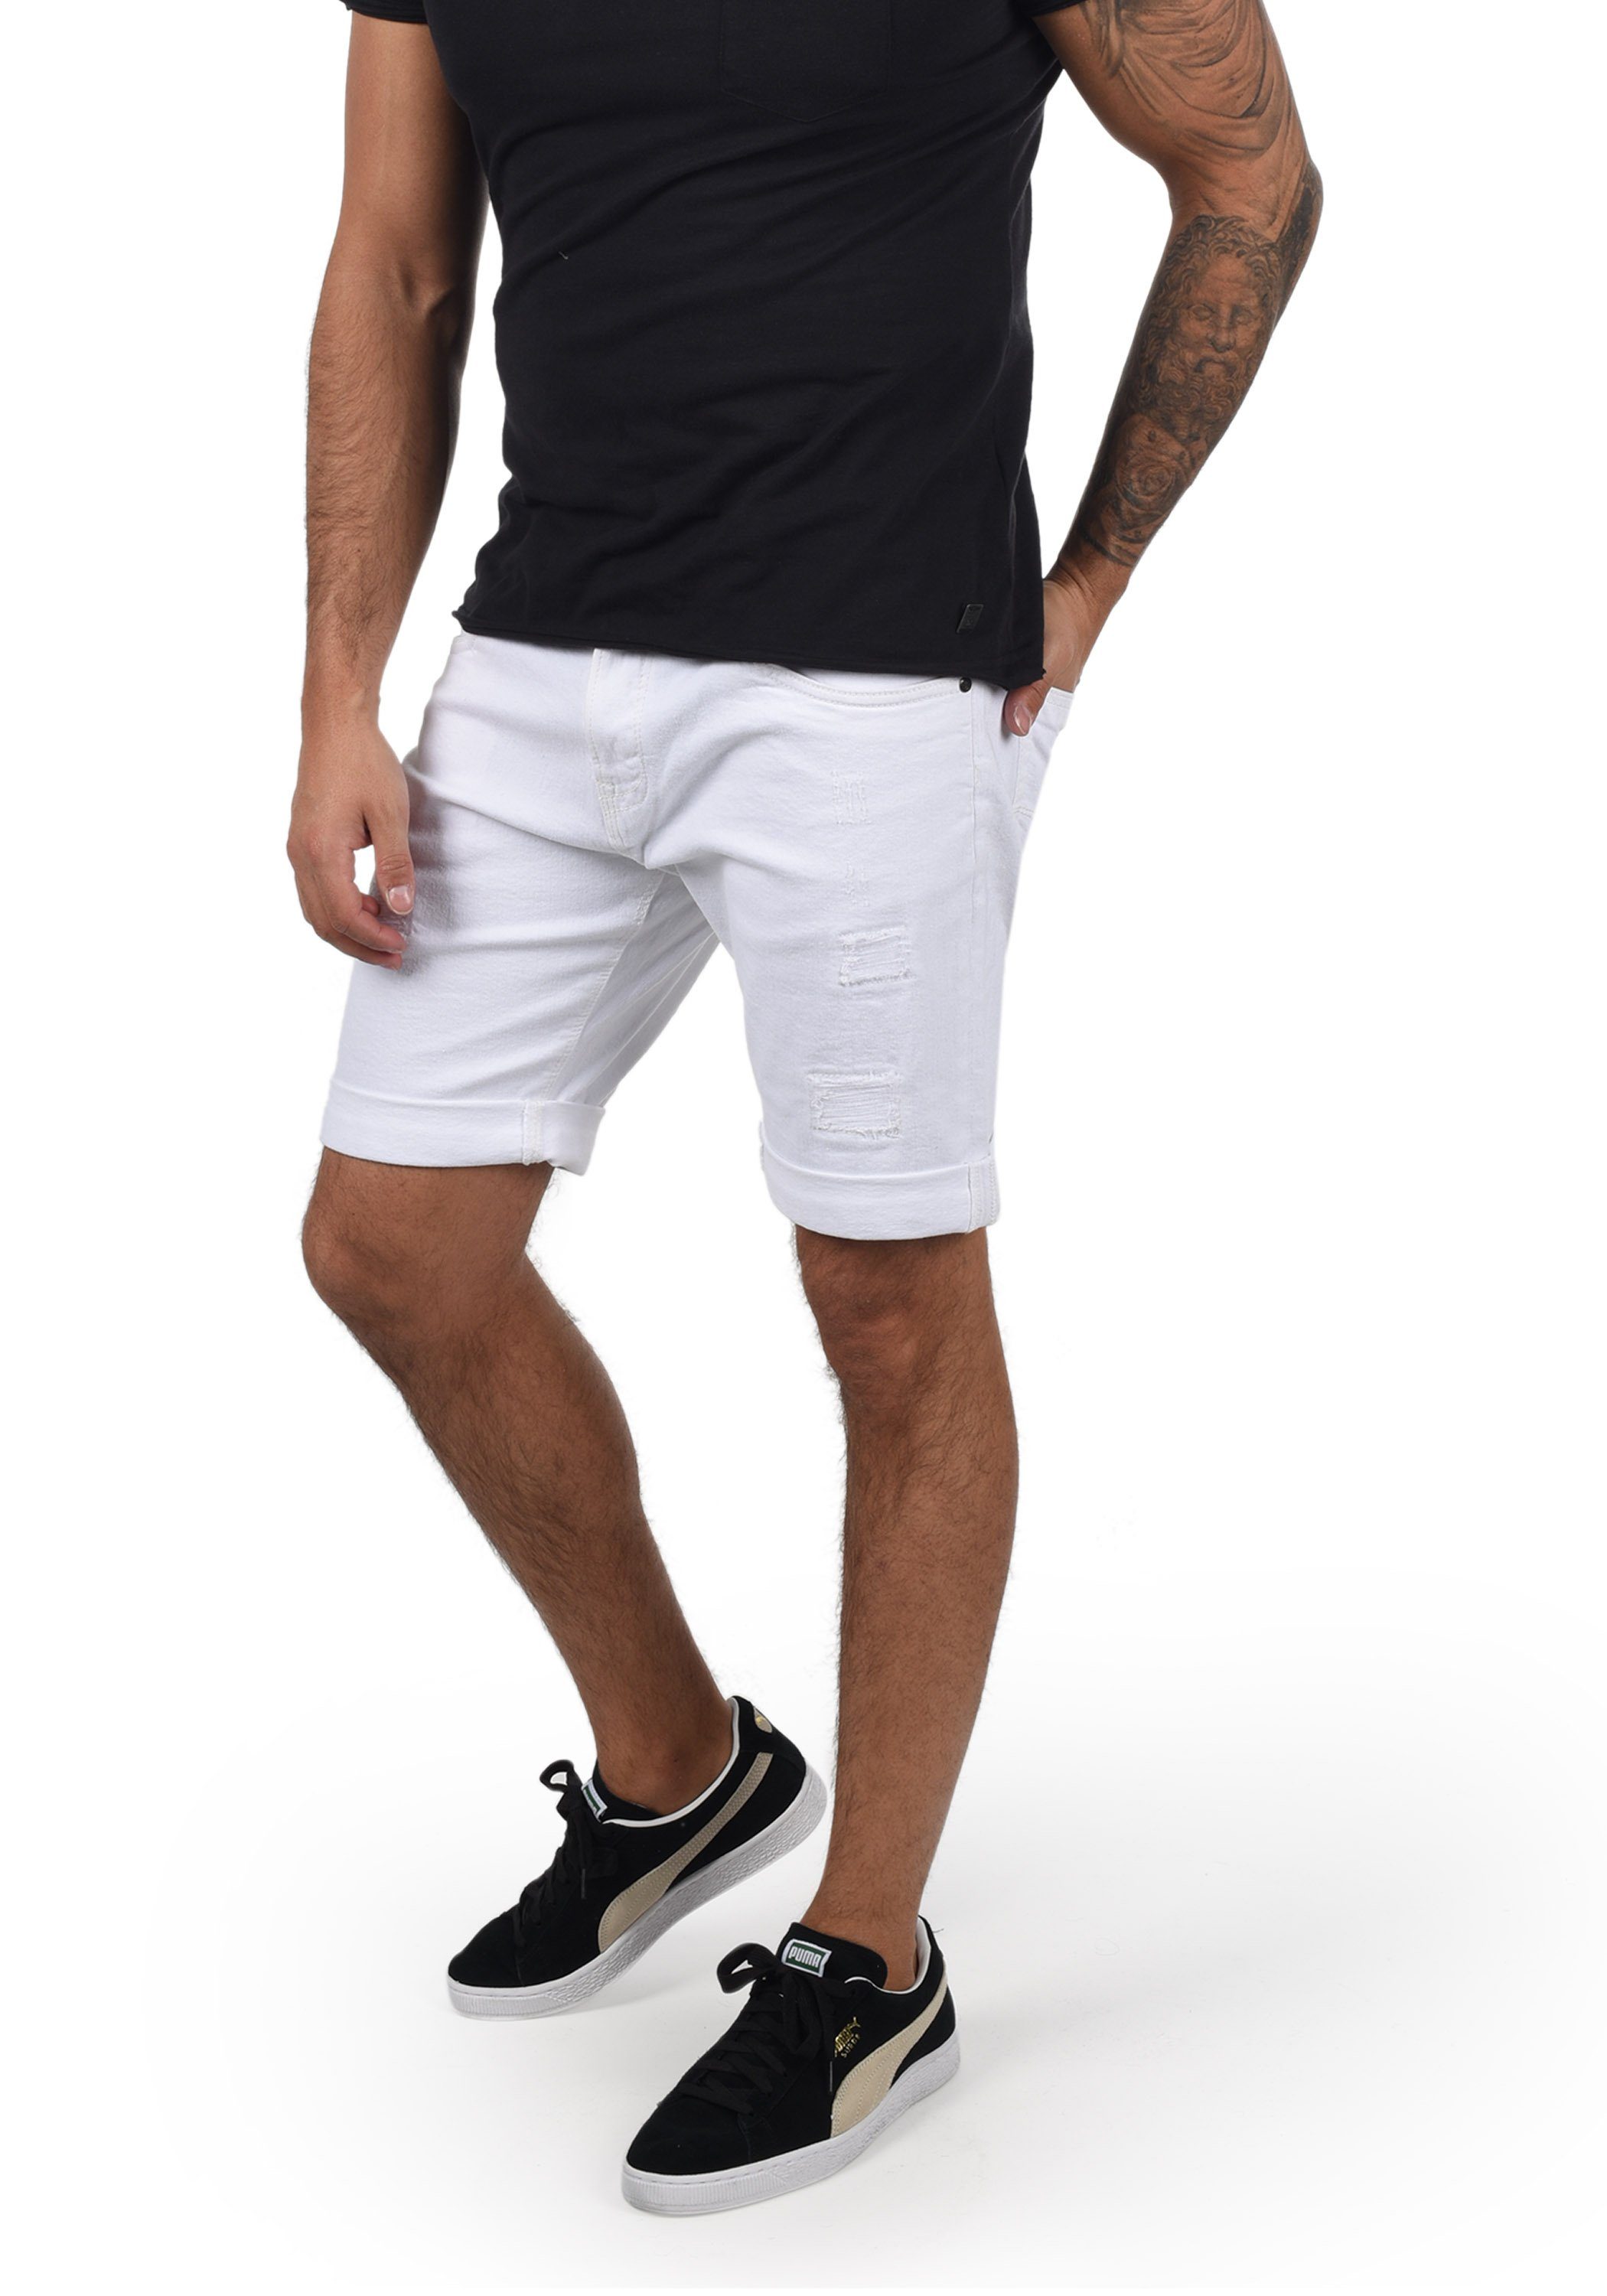 Jeansshorts 70201MM - Off-White Shorts - Indicode IDHallow (002)